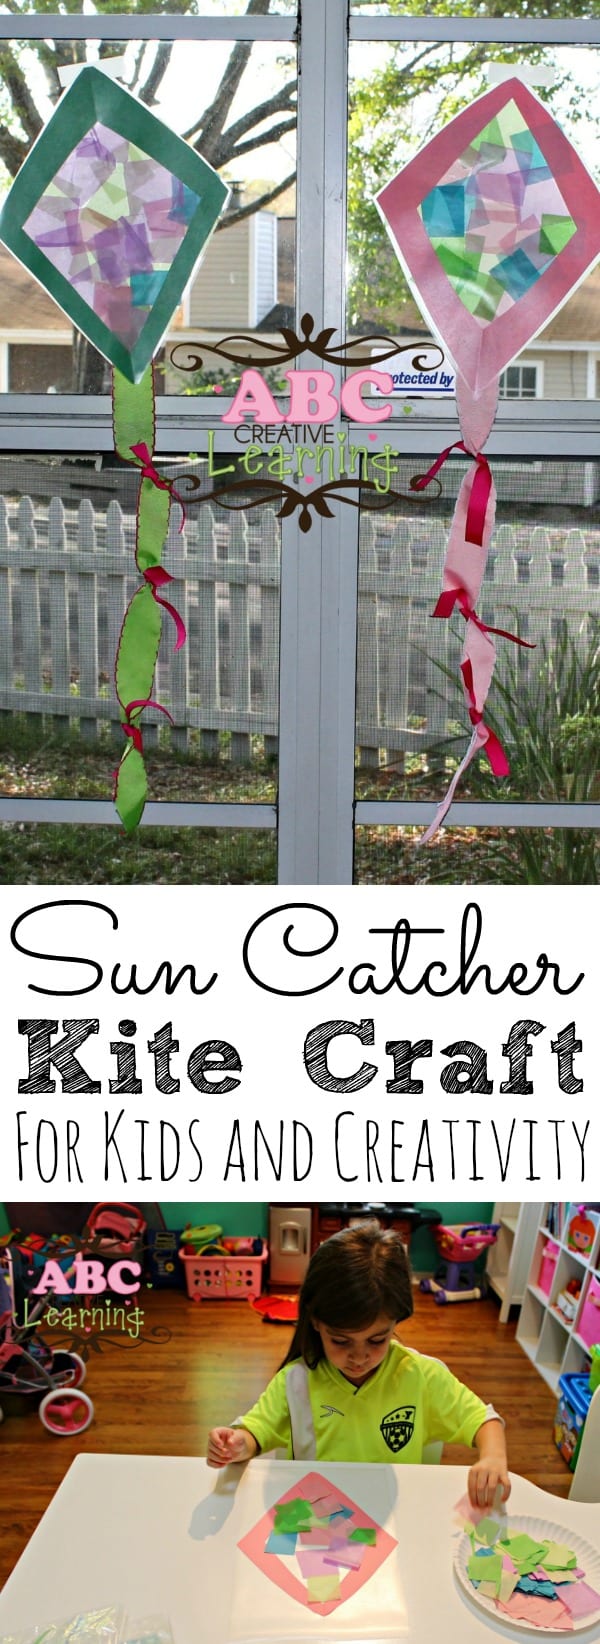 Sun Catcher Kite Craft